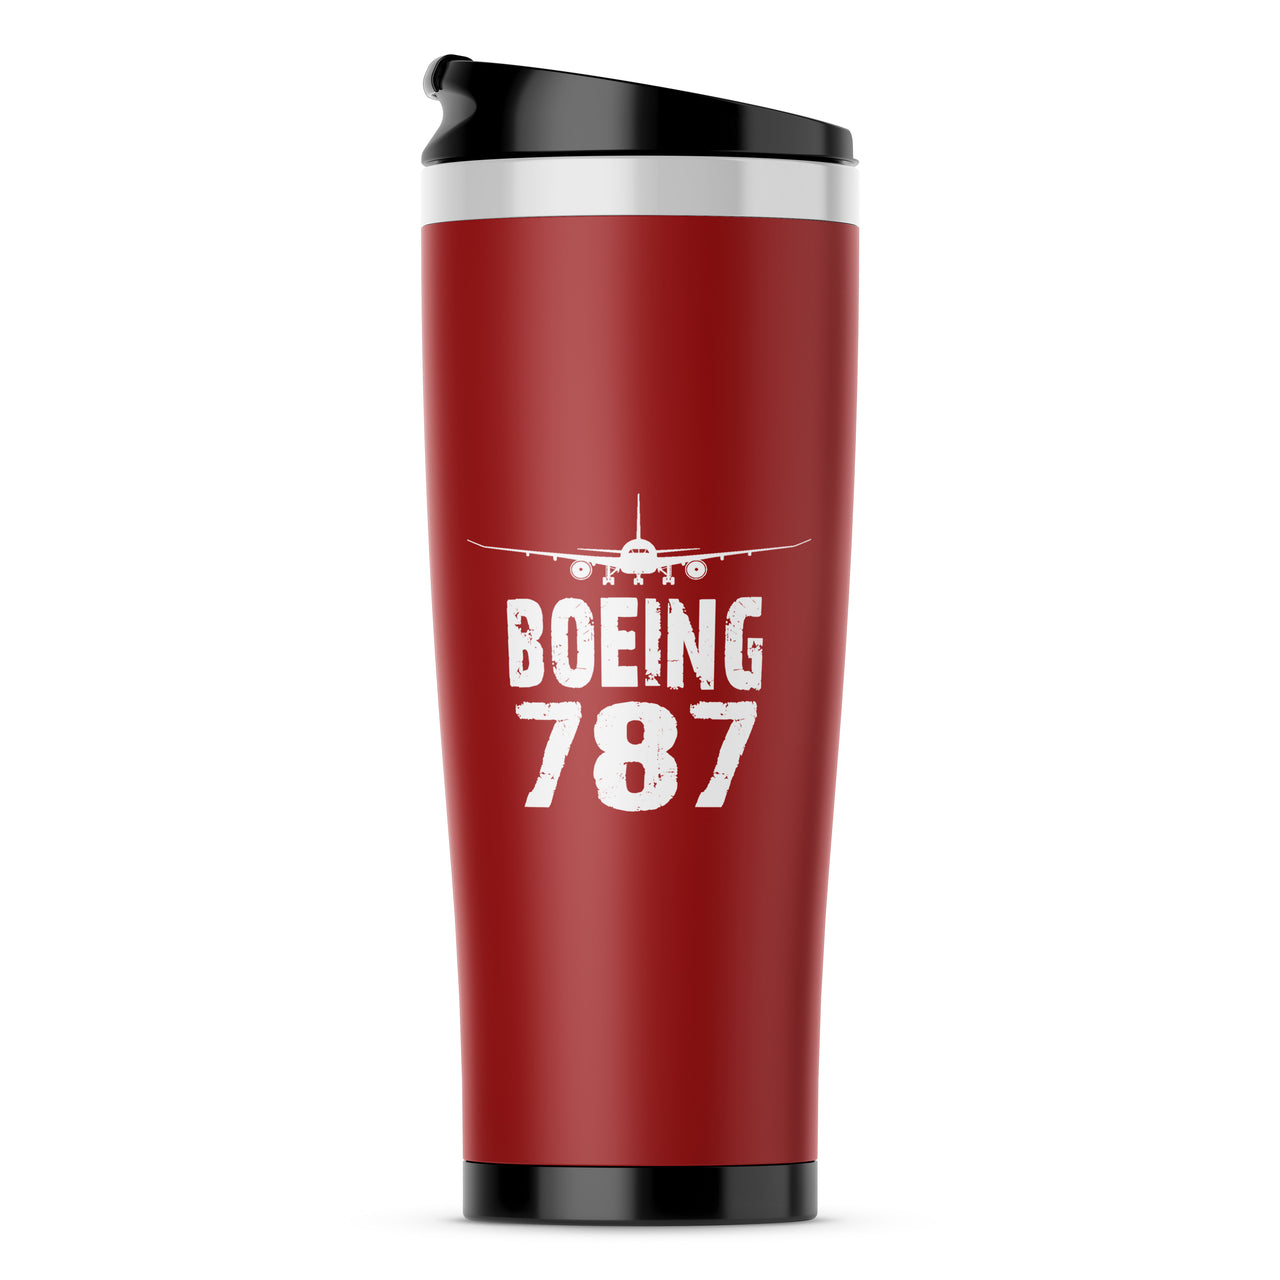 Boeing 787 & Plane Designed Travel Mugs